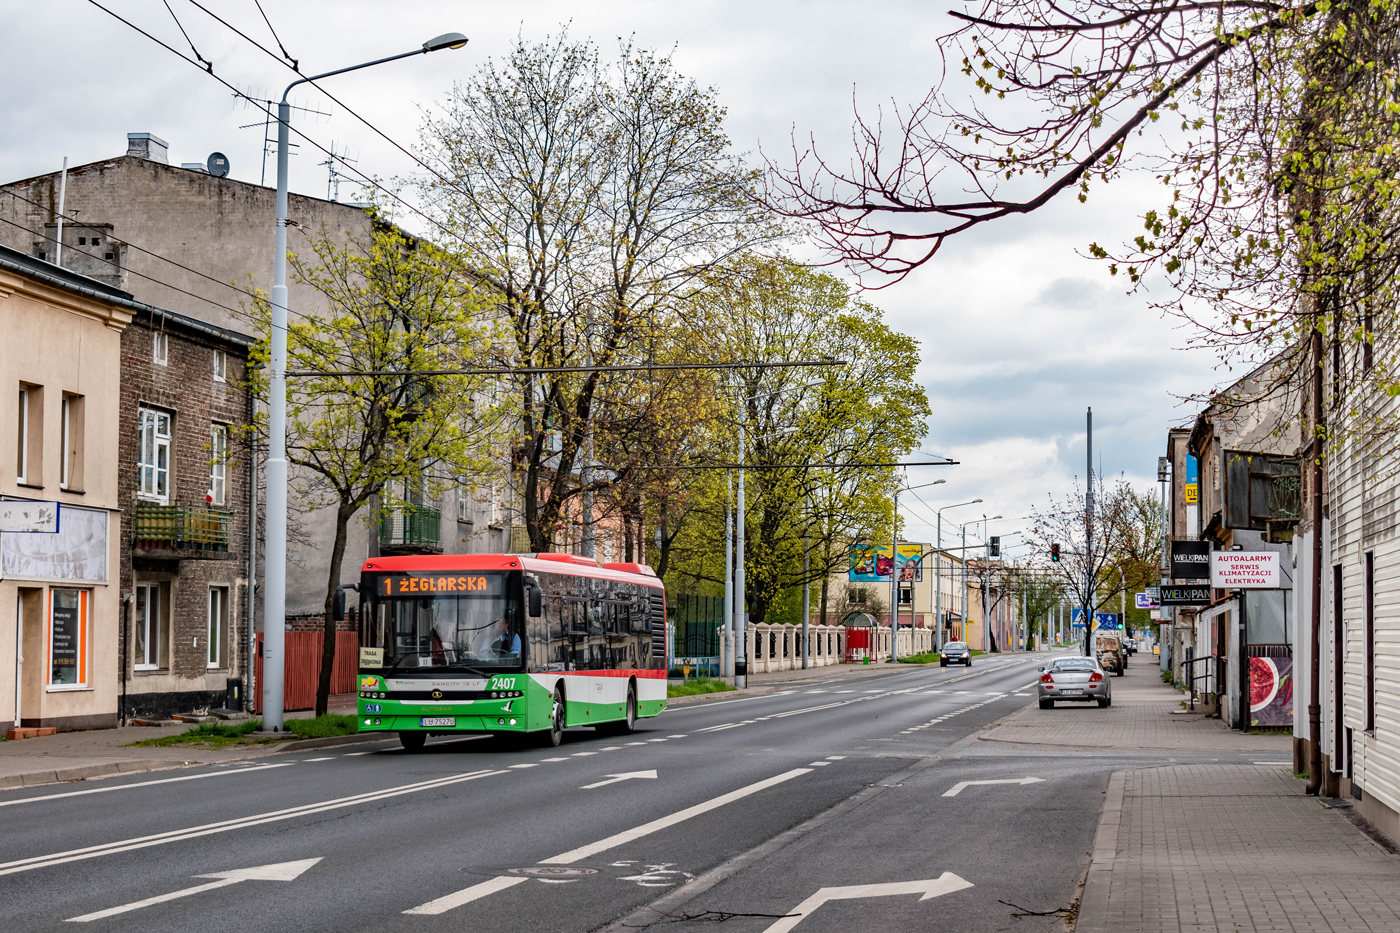 Lublin, Autosan Sancity M12LF č. 2407